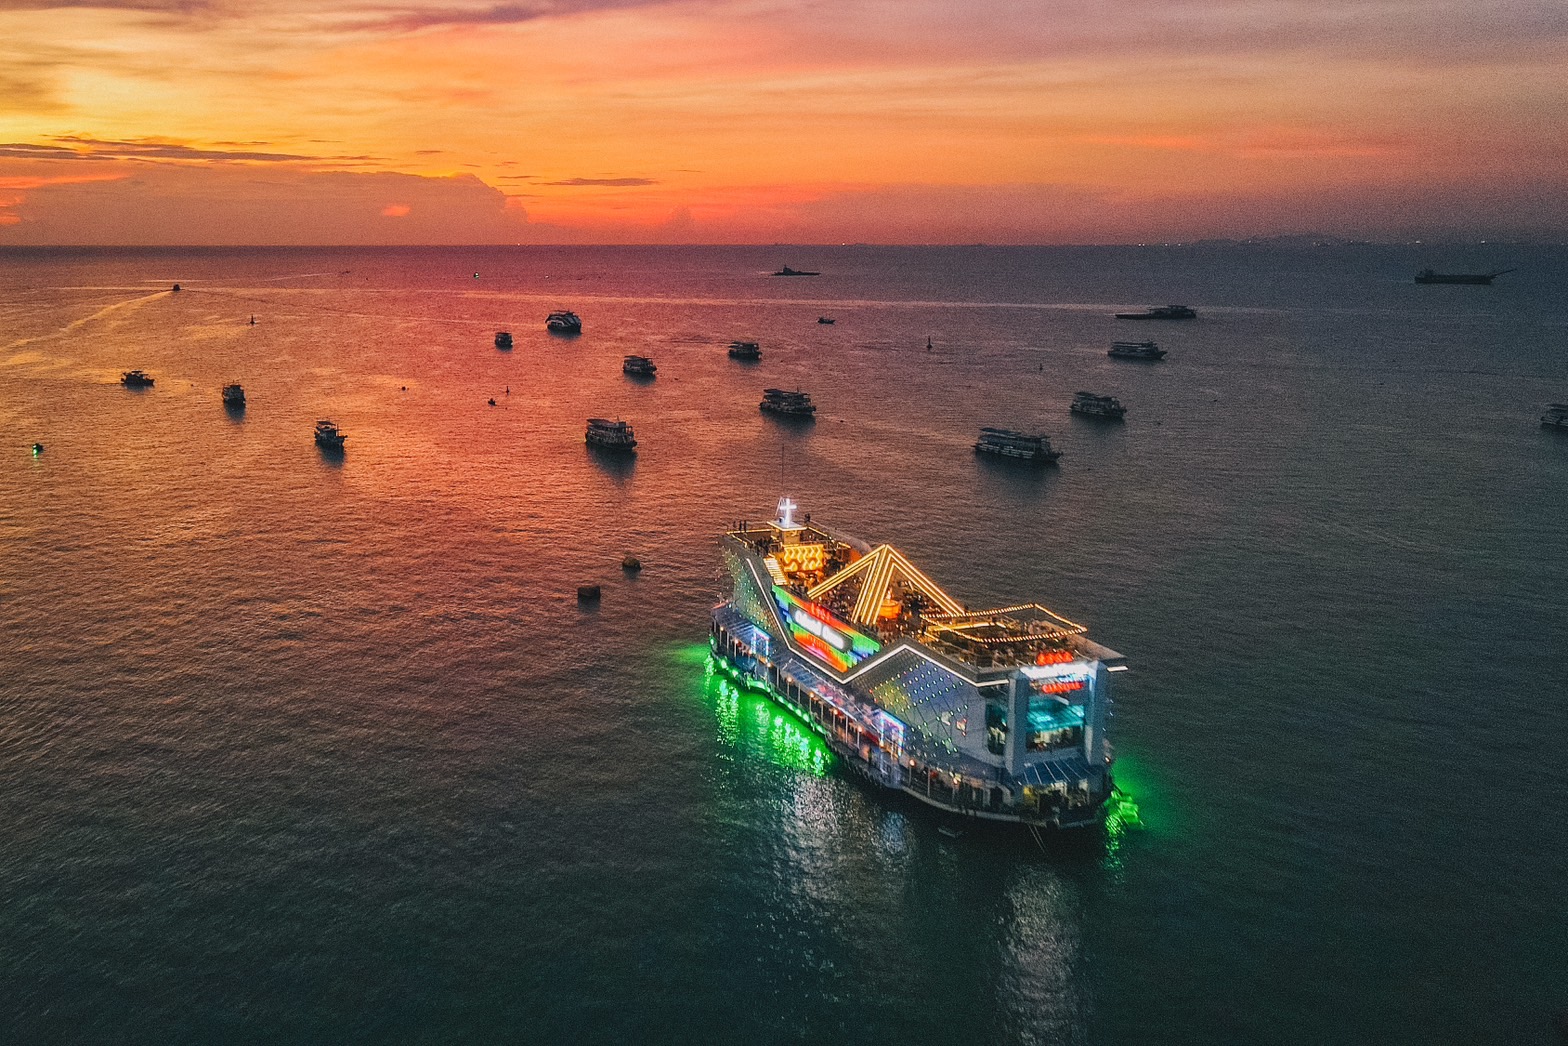 Ocean Sky Pattaya東方公主號 海洋天空郵輪晚宴 一次飽覽人妖＋猛男舞團表演